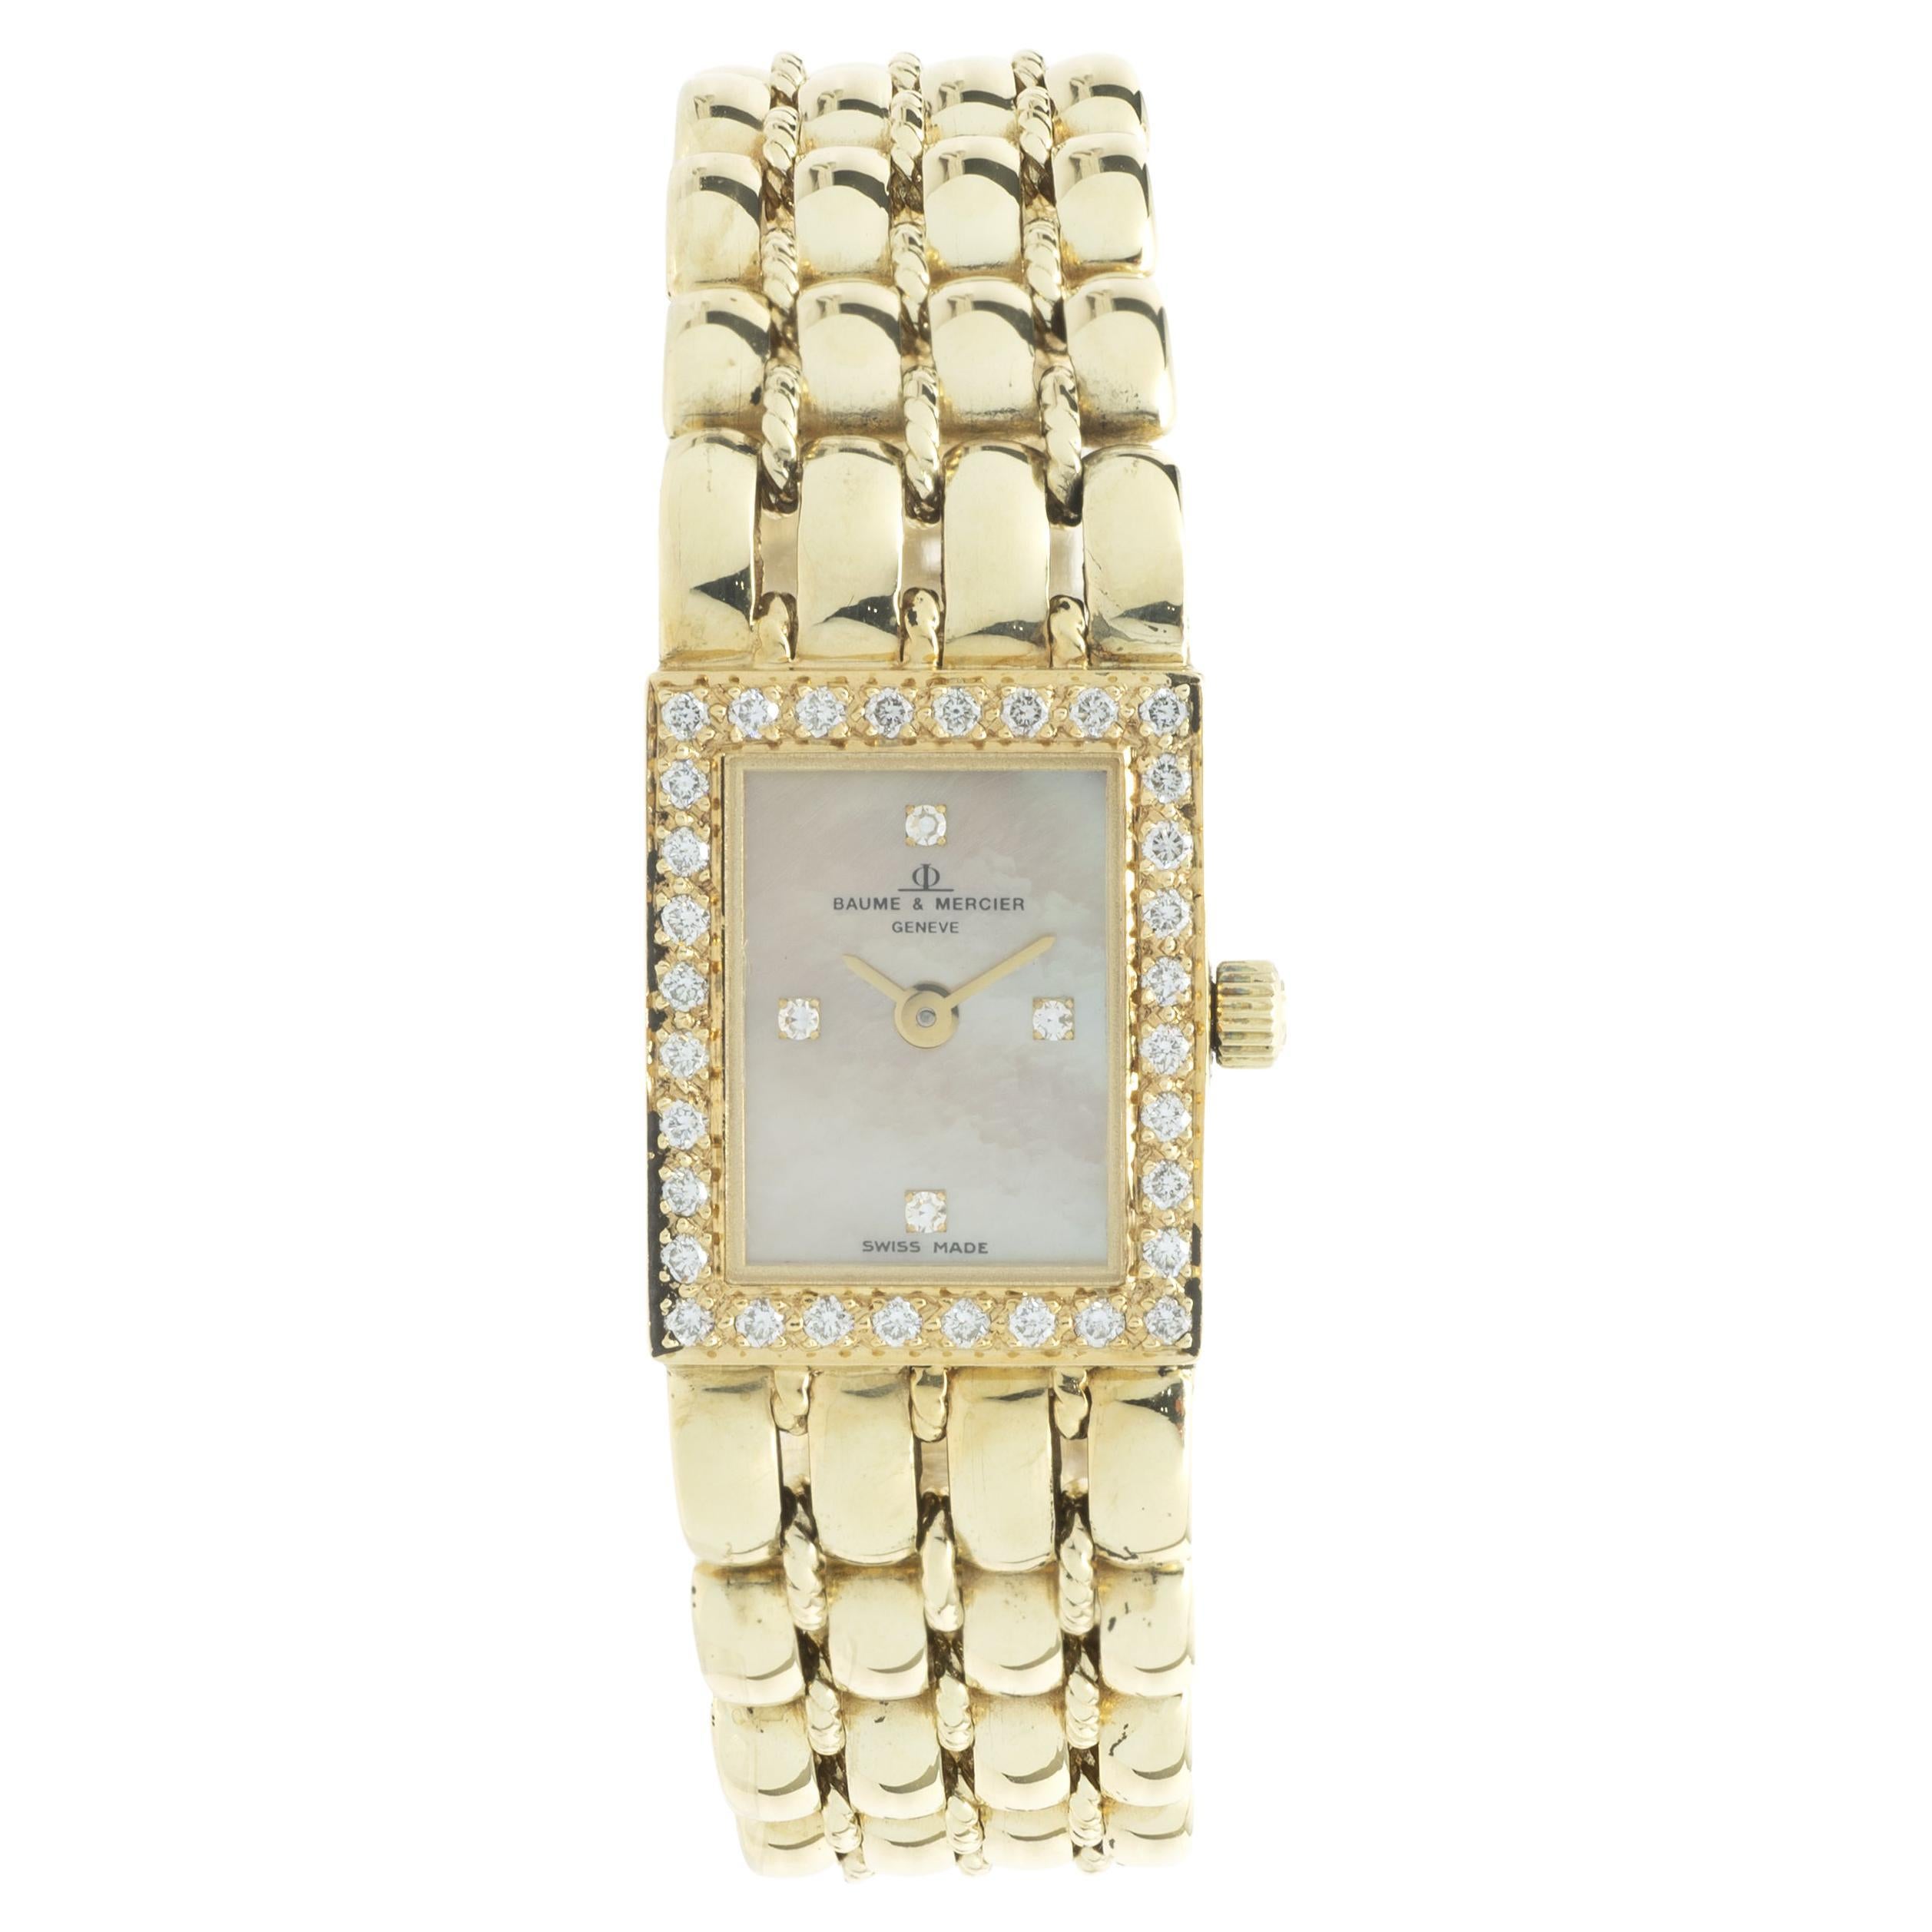 Baume & Mercier 14 Karat Yellow Gold Ladies Diamond Dress Watch